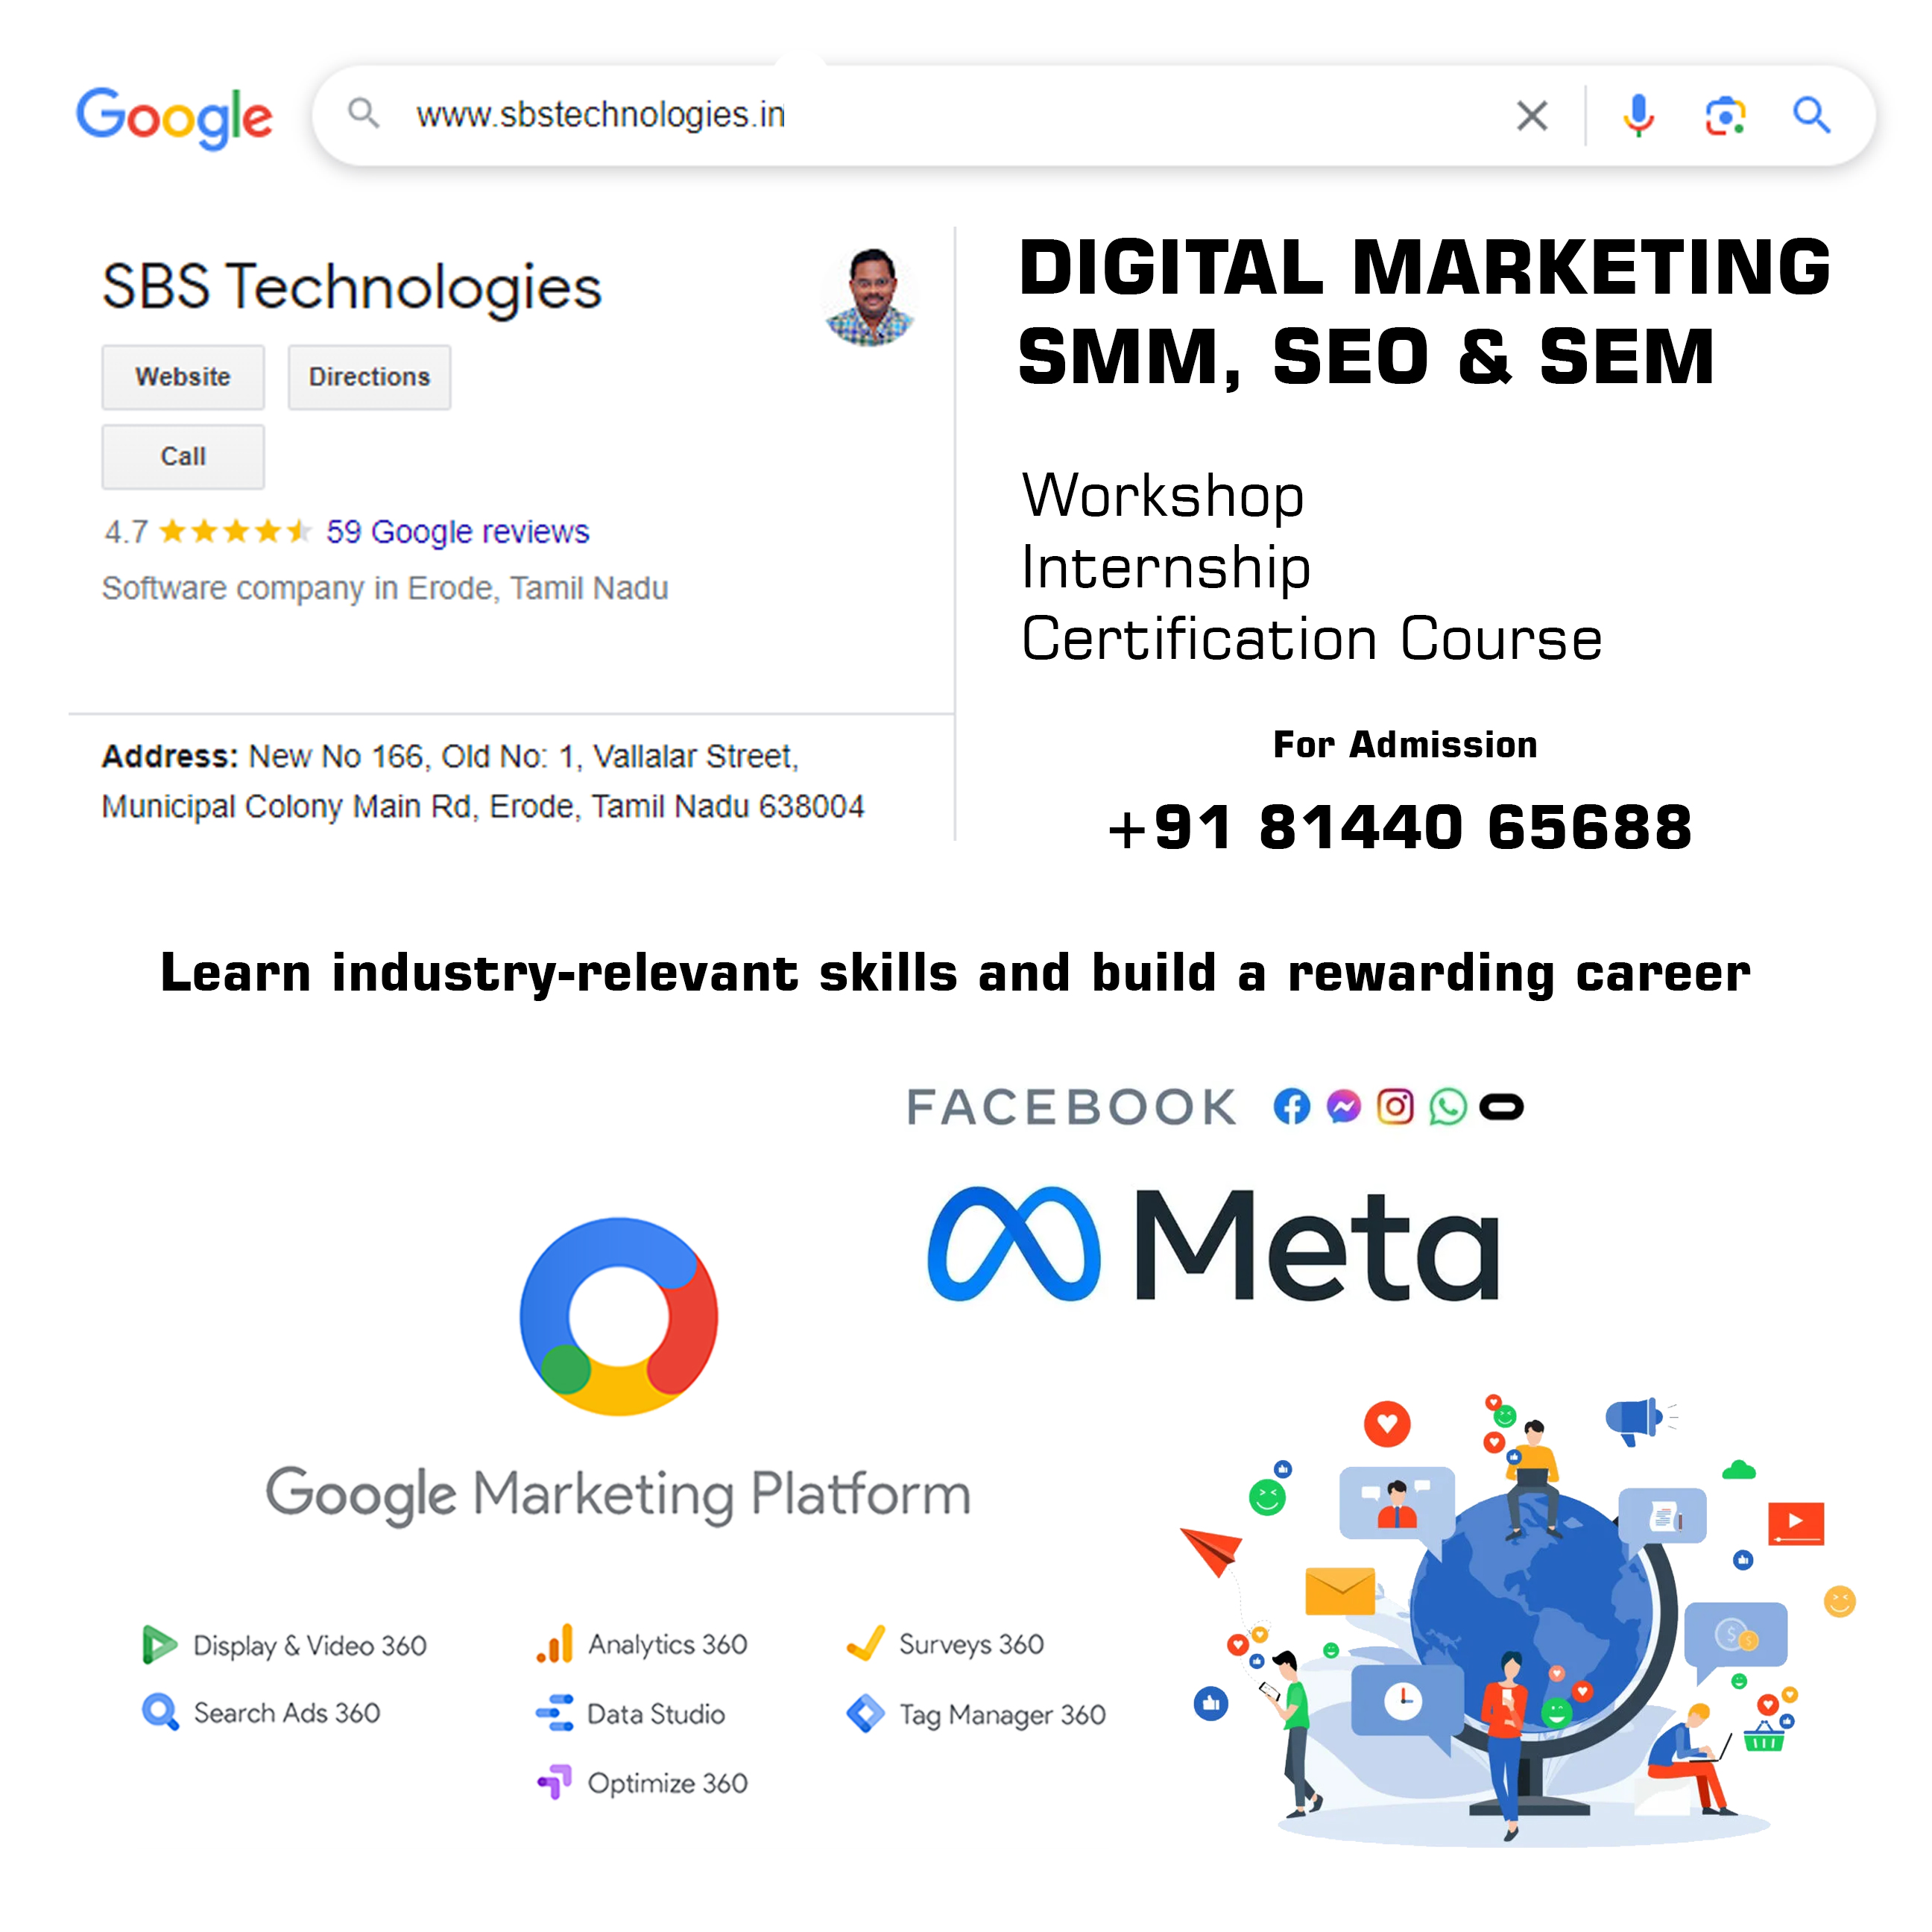 Digital Marketing, SMM, SEO & SEM